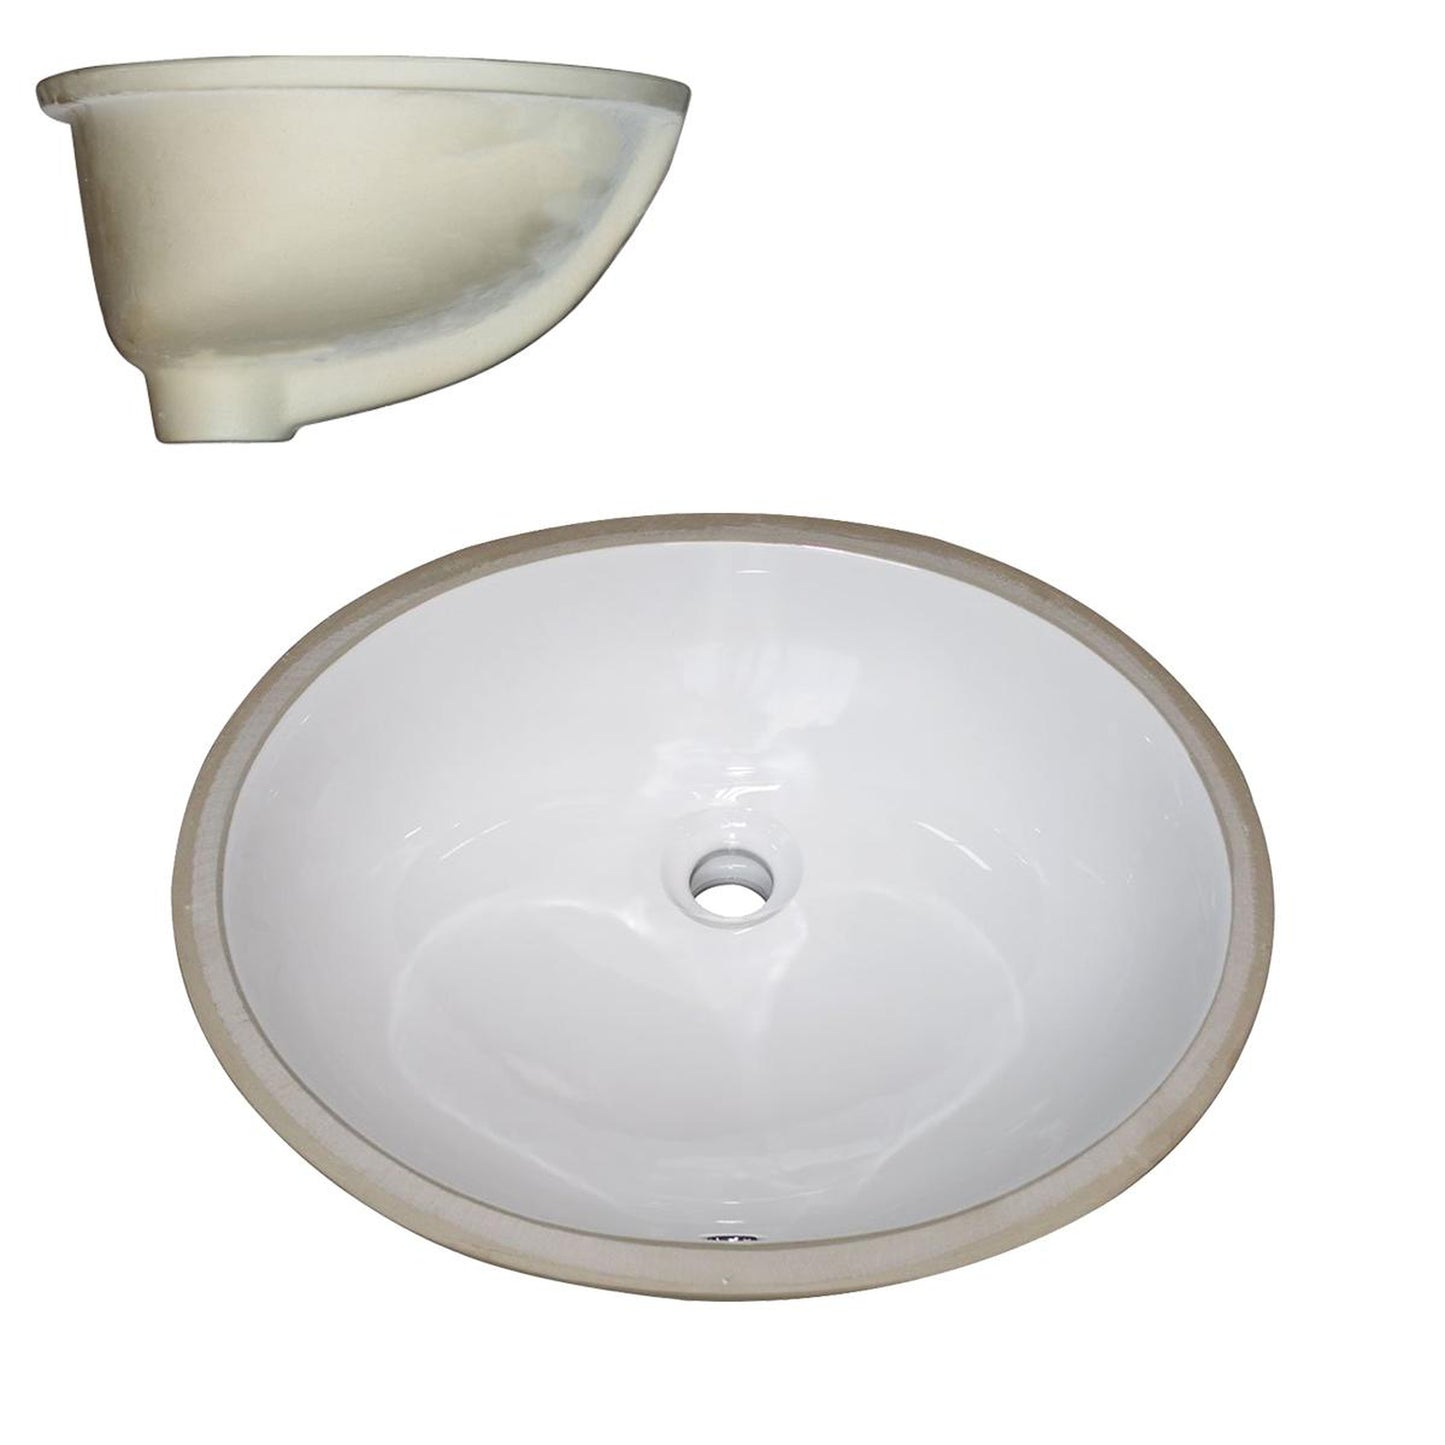 Pelican Int'l Pearl Series PL-3059 17 1/4" x 14" Bone Porcelain Undermount Bathroom Sink